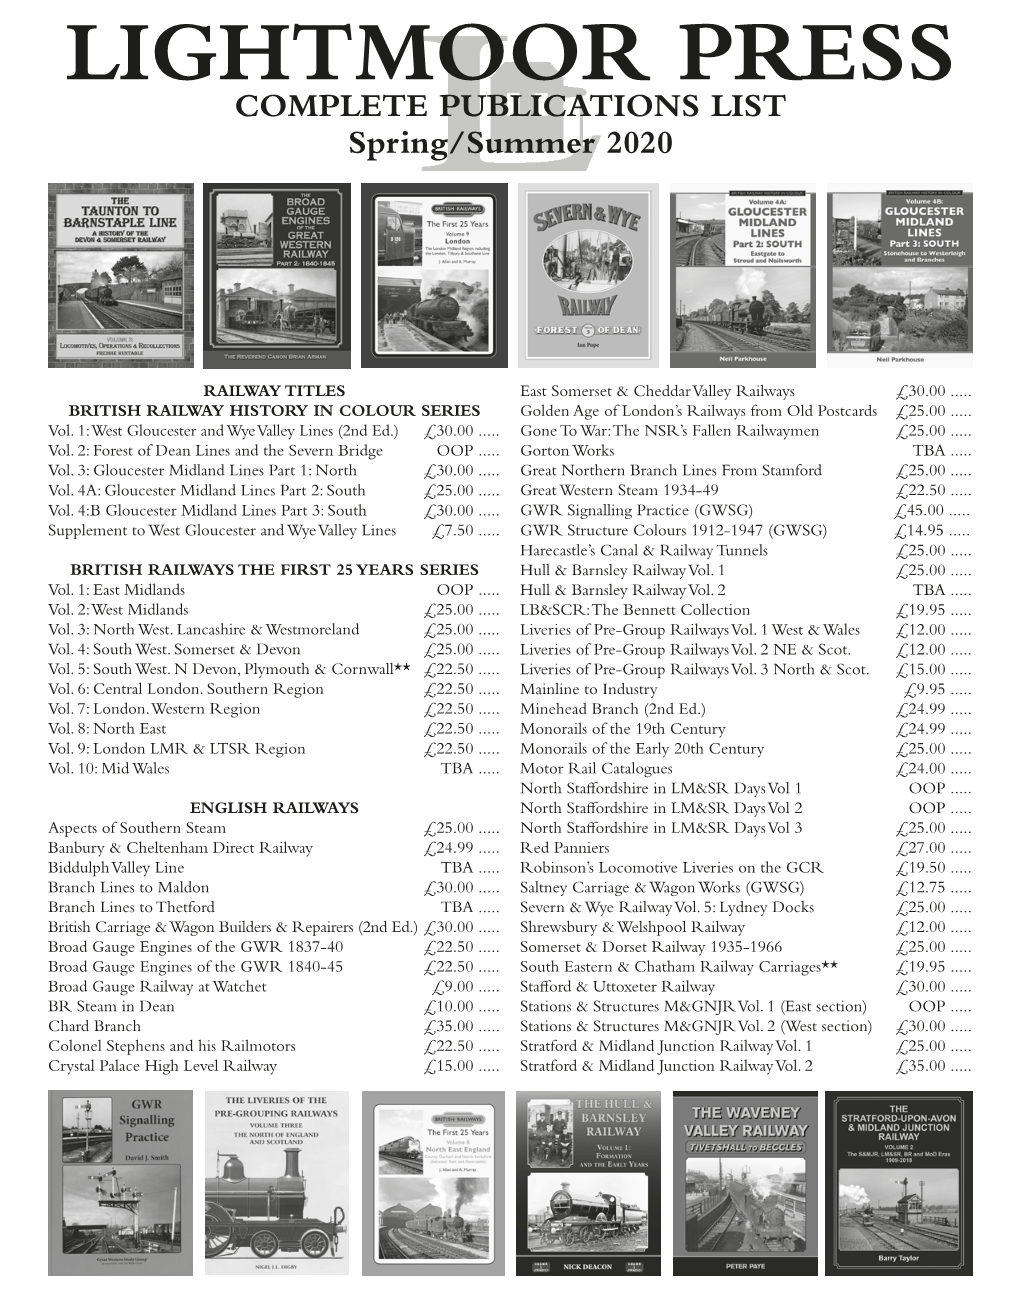 LIGHTMOOR PRESS COMPLETE PUBLICATIONS LIST Spring/Summer 2020